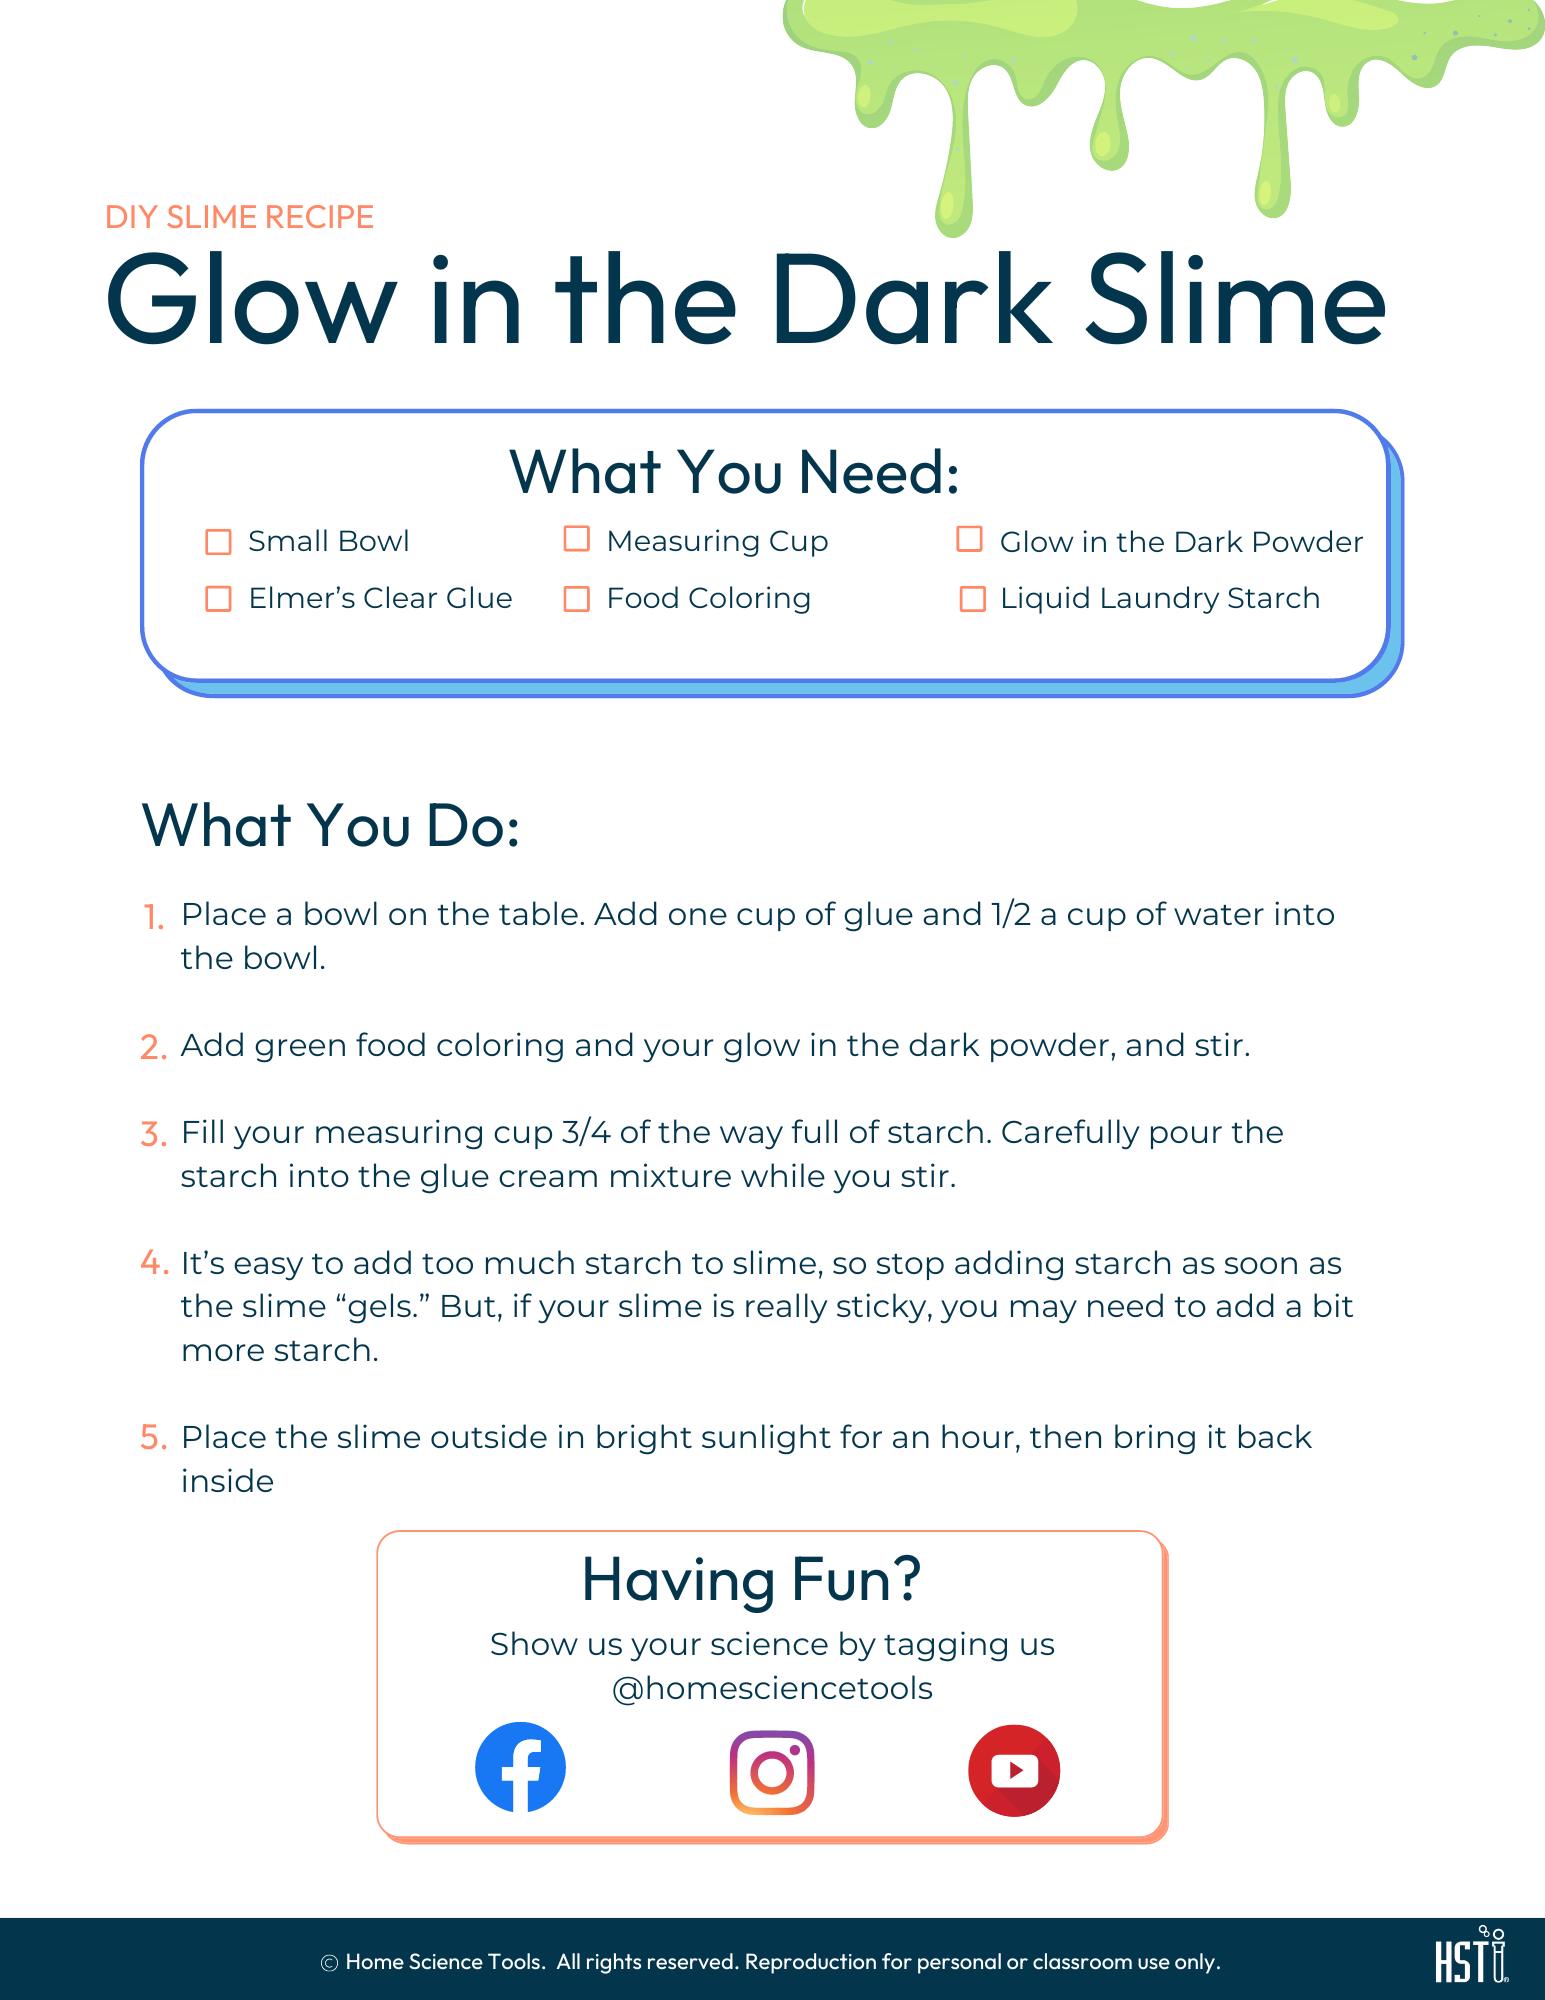 DIY Kid's Worry-Free Slime Recipe: Elmer's Official Slime Recipe